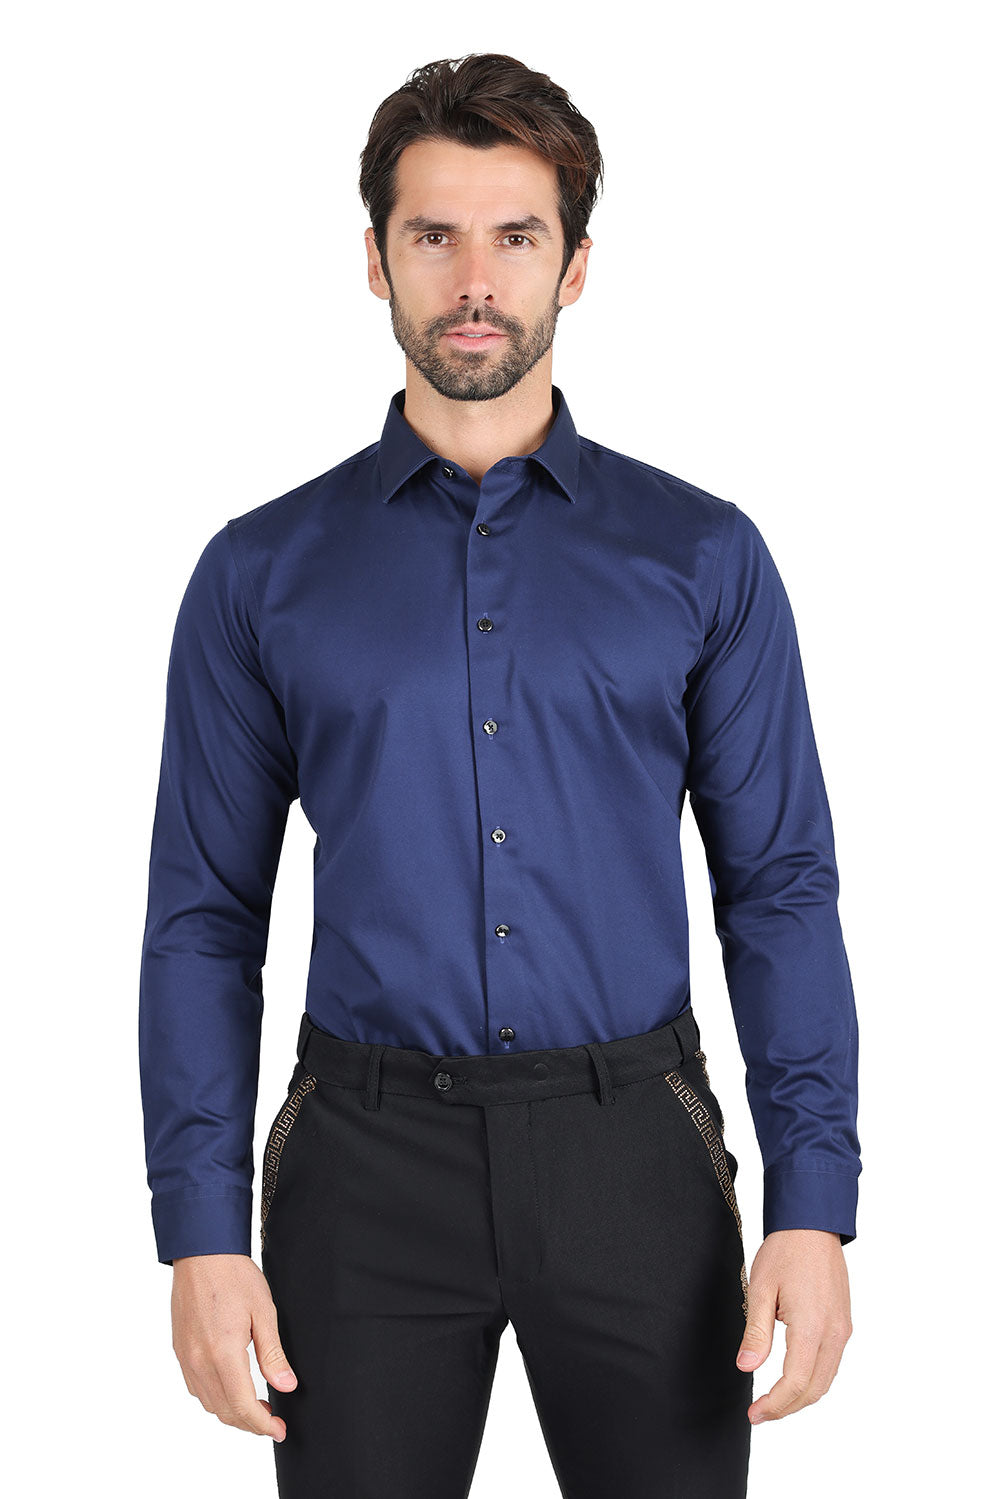 BARABAS Men's Solid Basic Palin Premium Button Down Dress Shirts 2DPS01 Navy